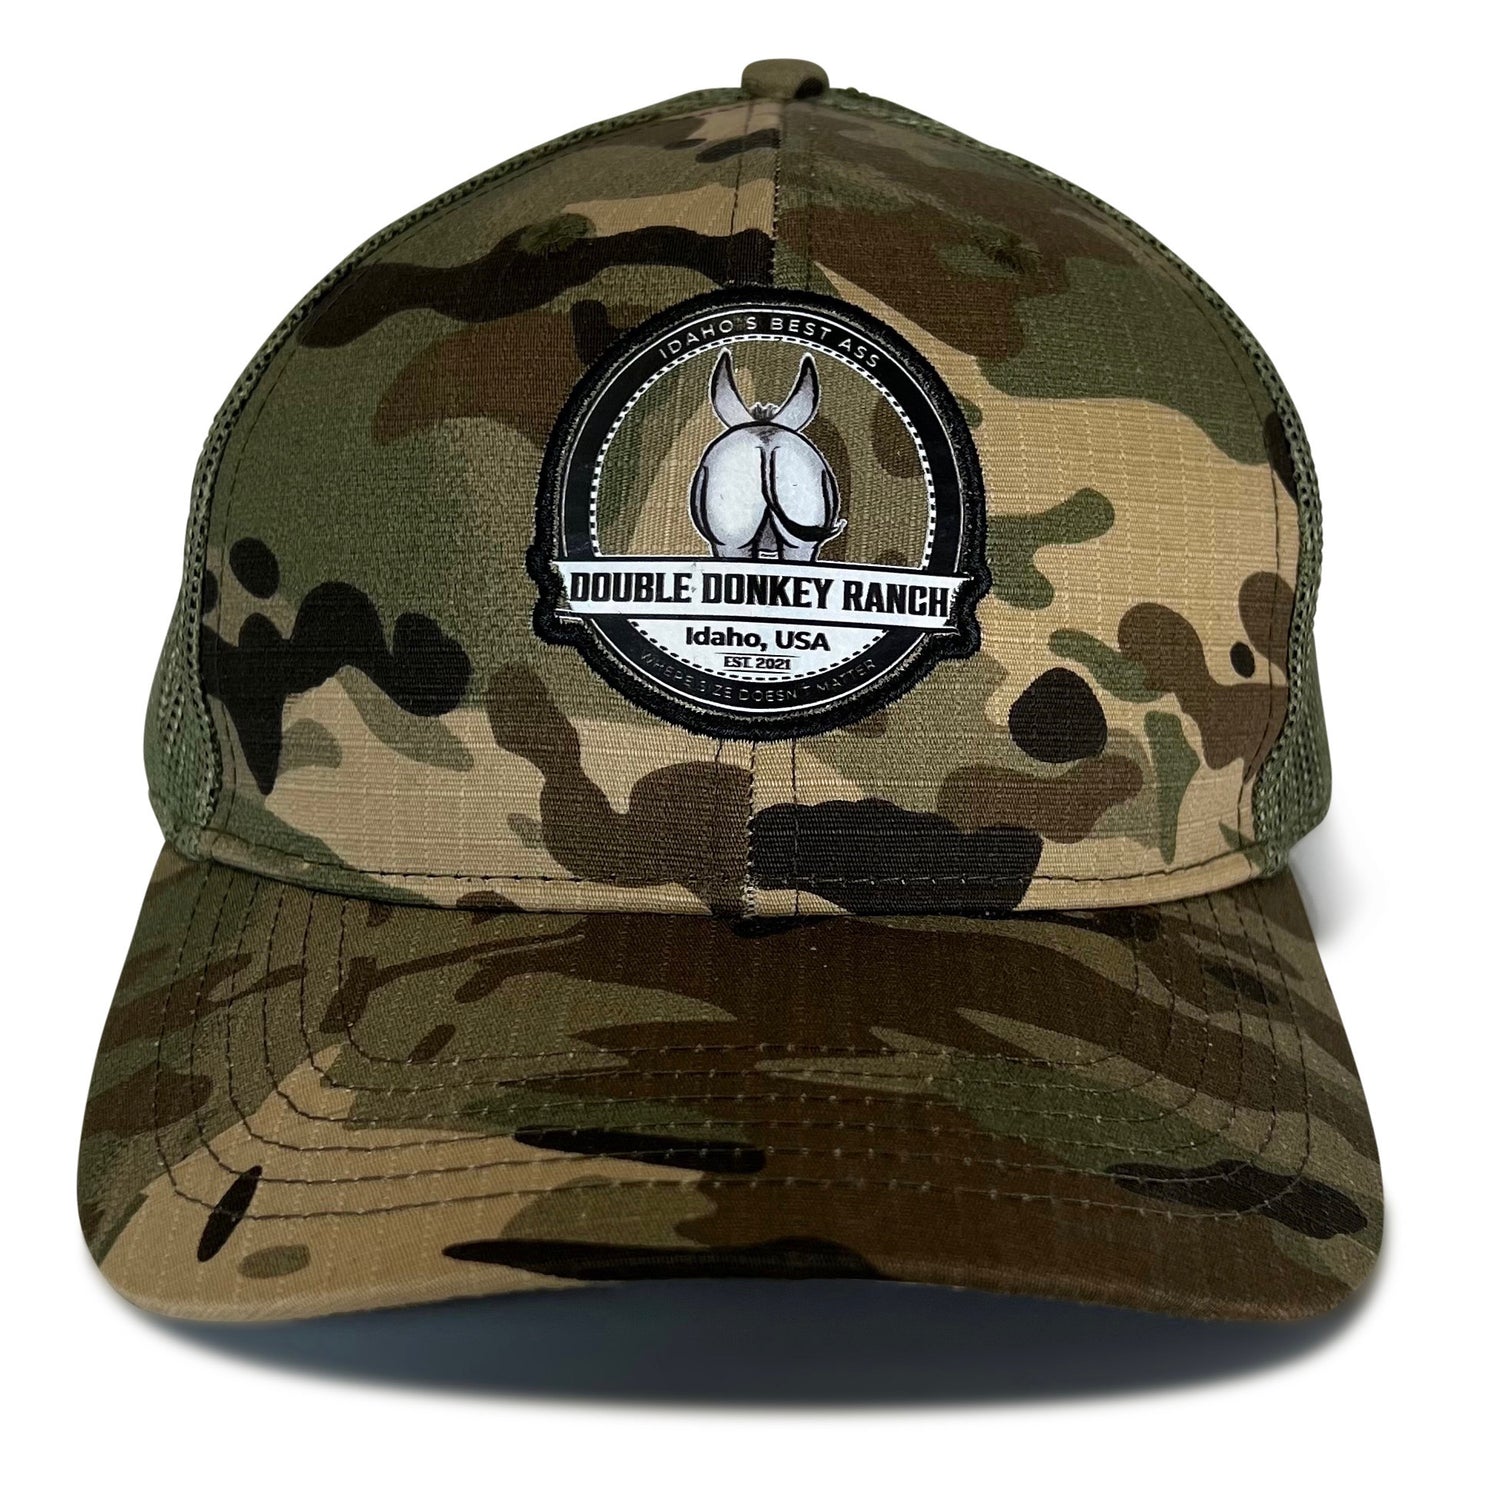 CLIMATE Blank Trucker Caps Camouflage Dad Hats Family DIY Caps Men Women  Kid Children Hip Hop